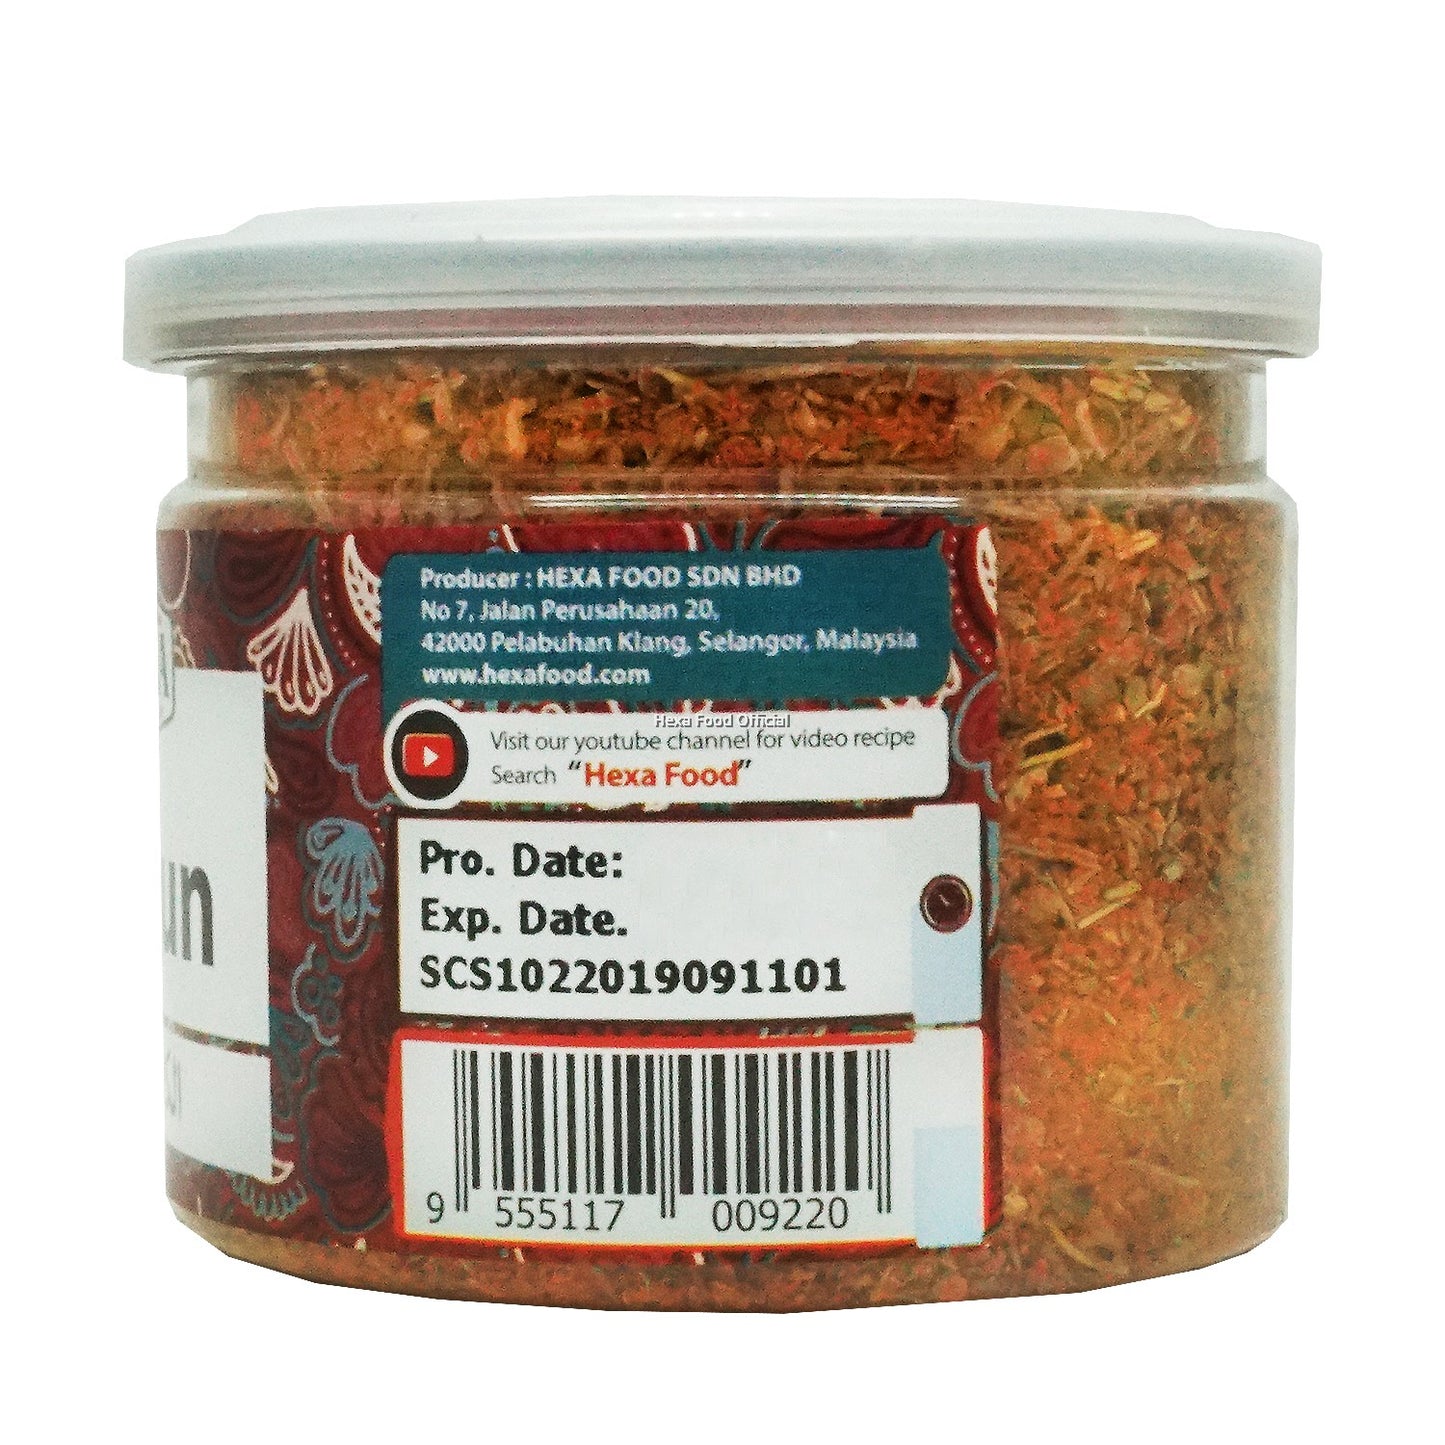 HEXA HALAL Cajun Spice 85gm + HEXA HALAL 4IN1 Italian Herbs (Basil+ Oregano+ Rosemary+ Parsley) 24gm